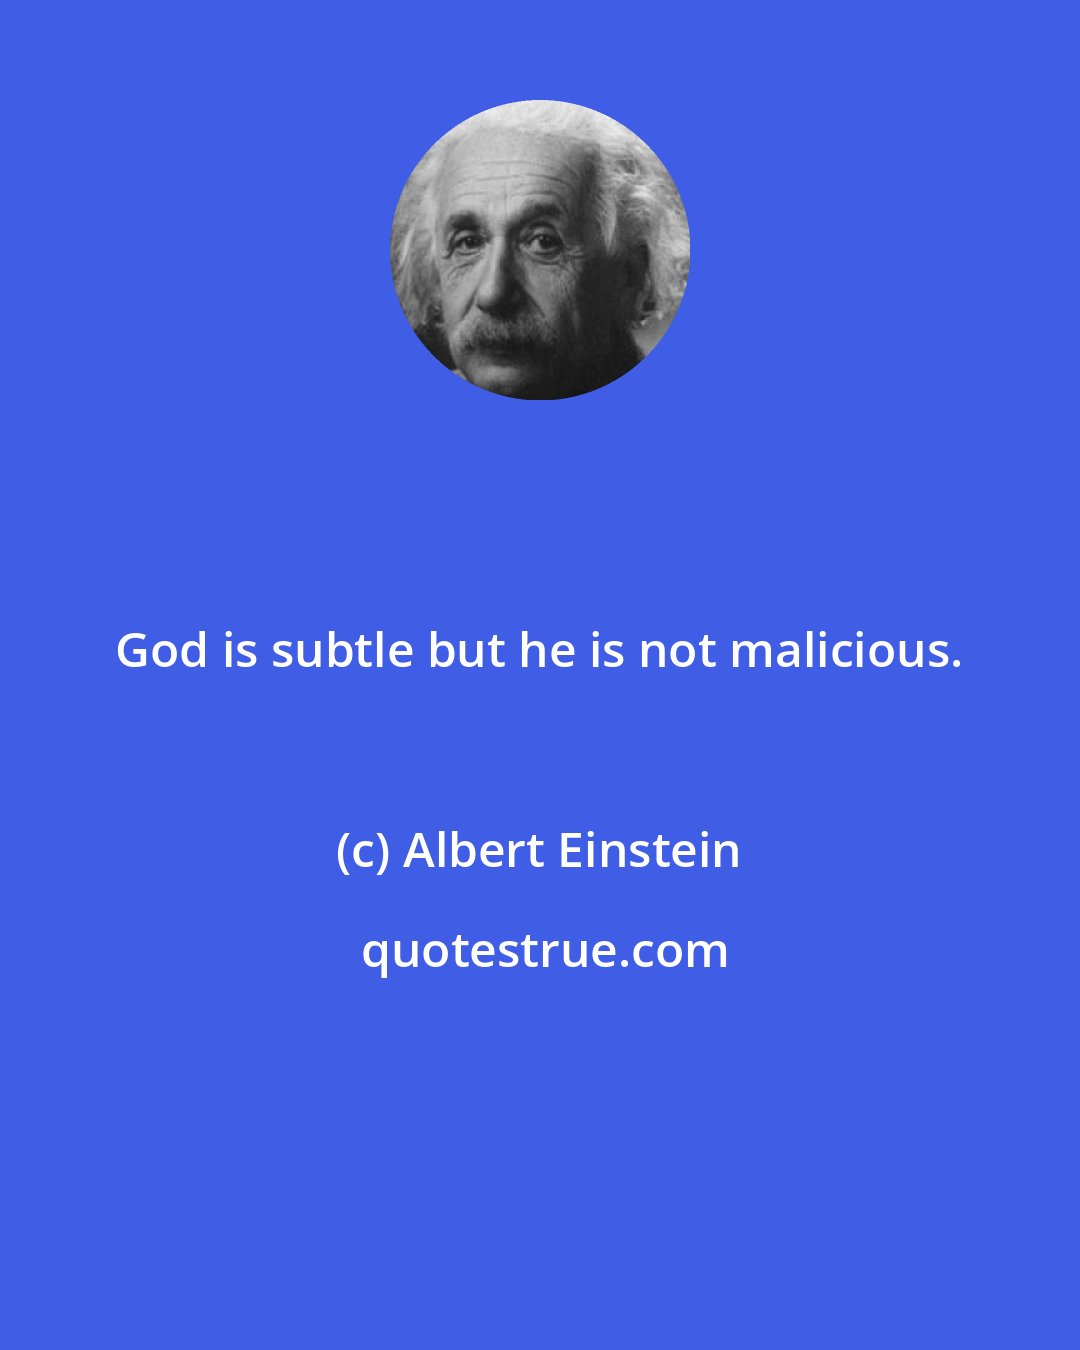 Albert Einstein: God is subtle but he is not malicious.